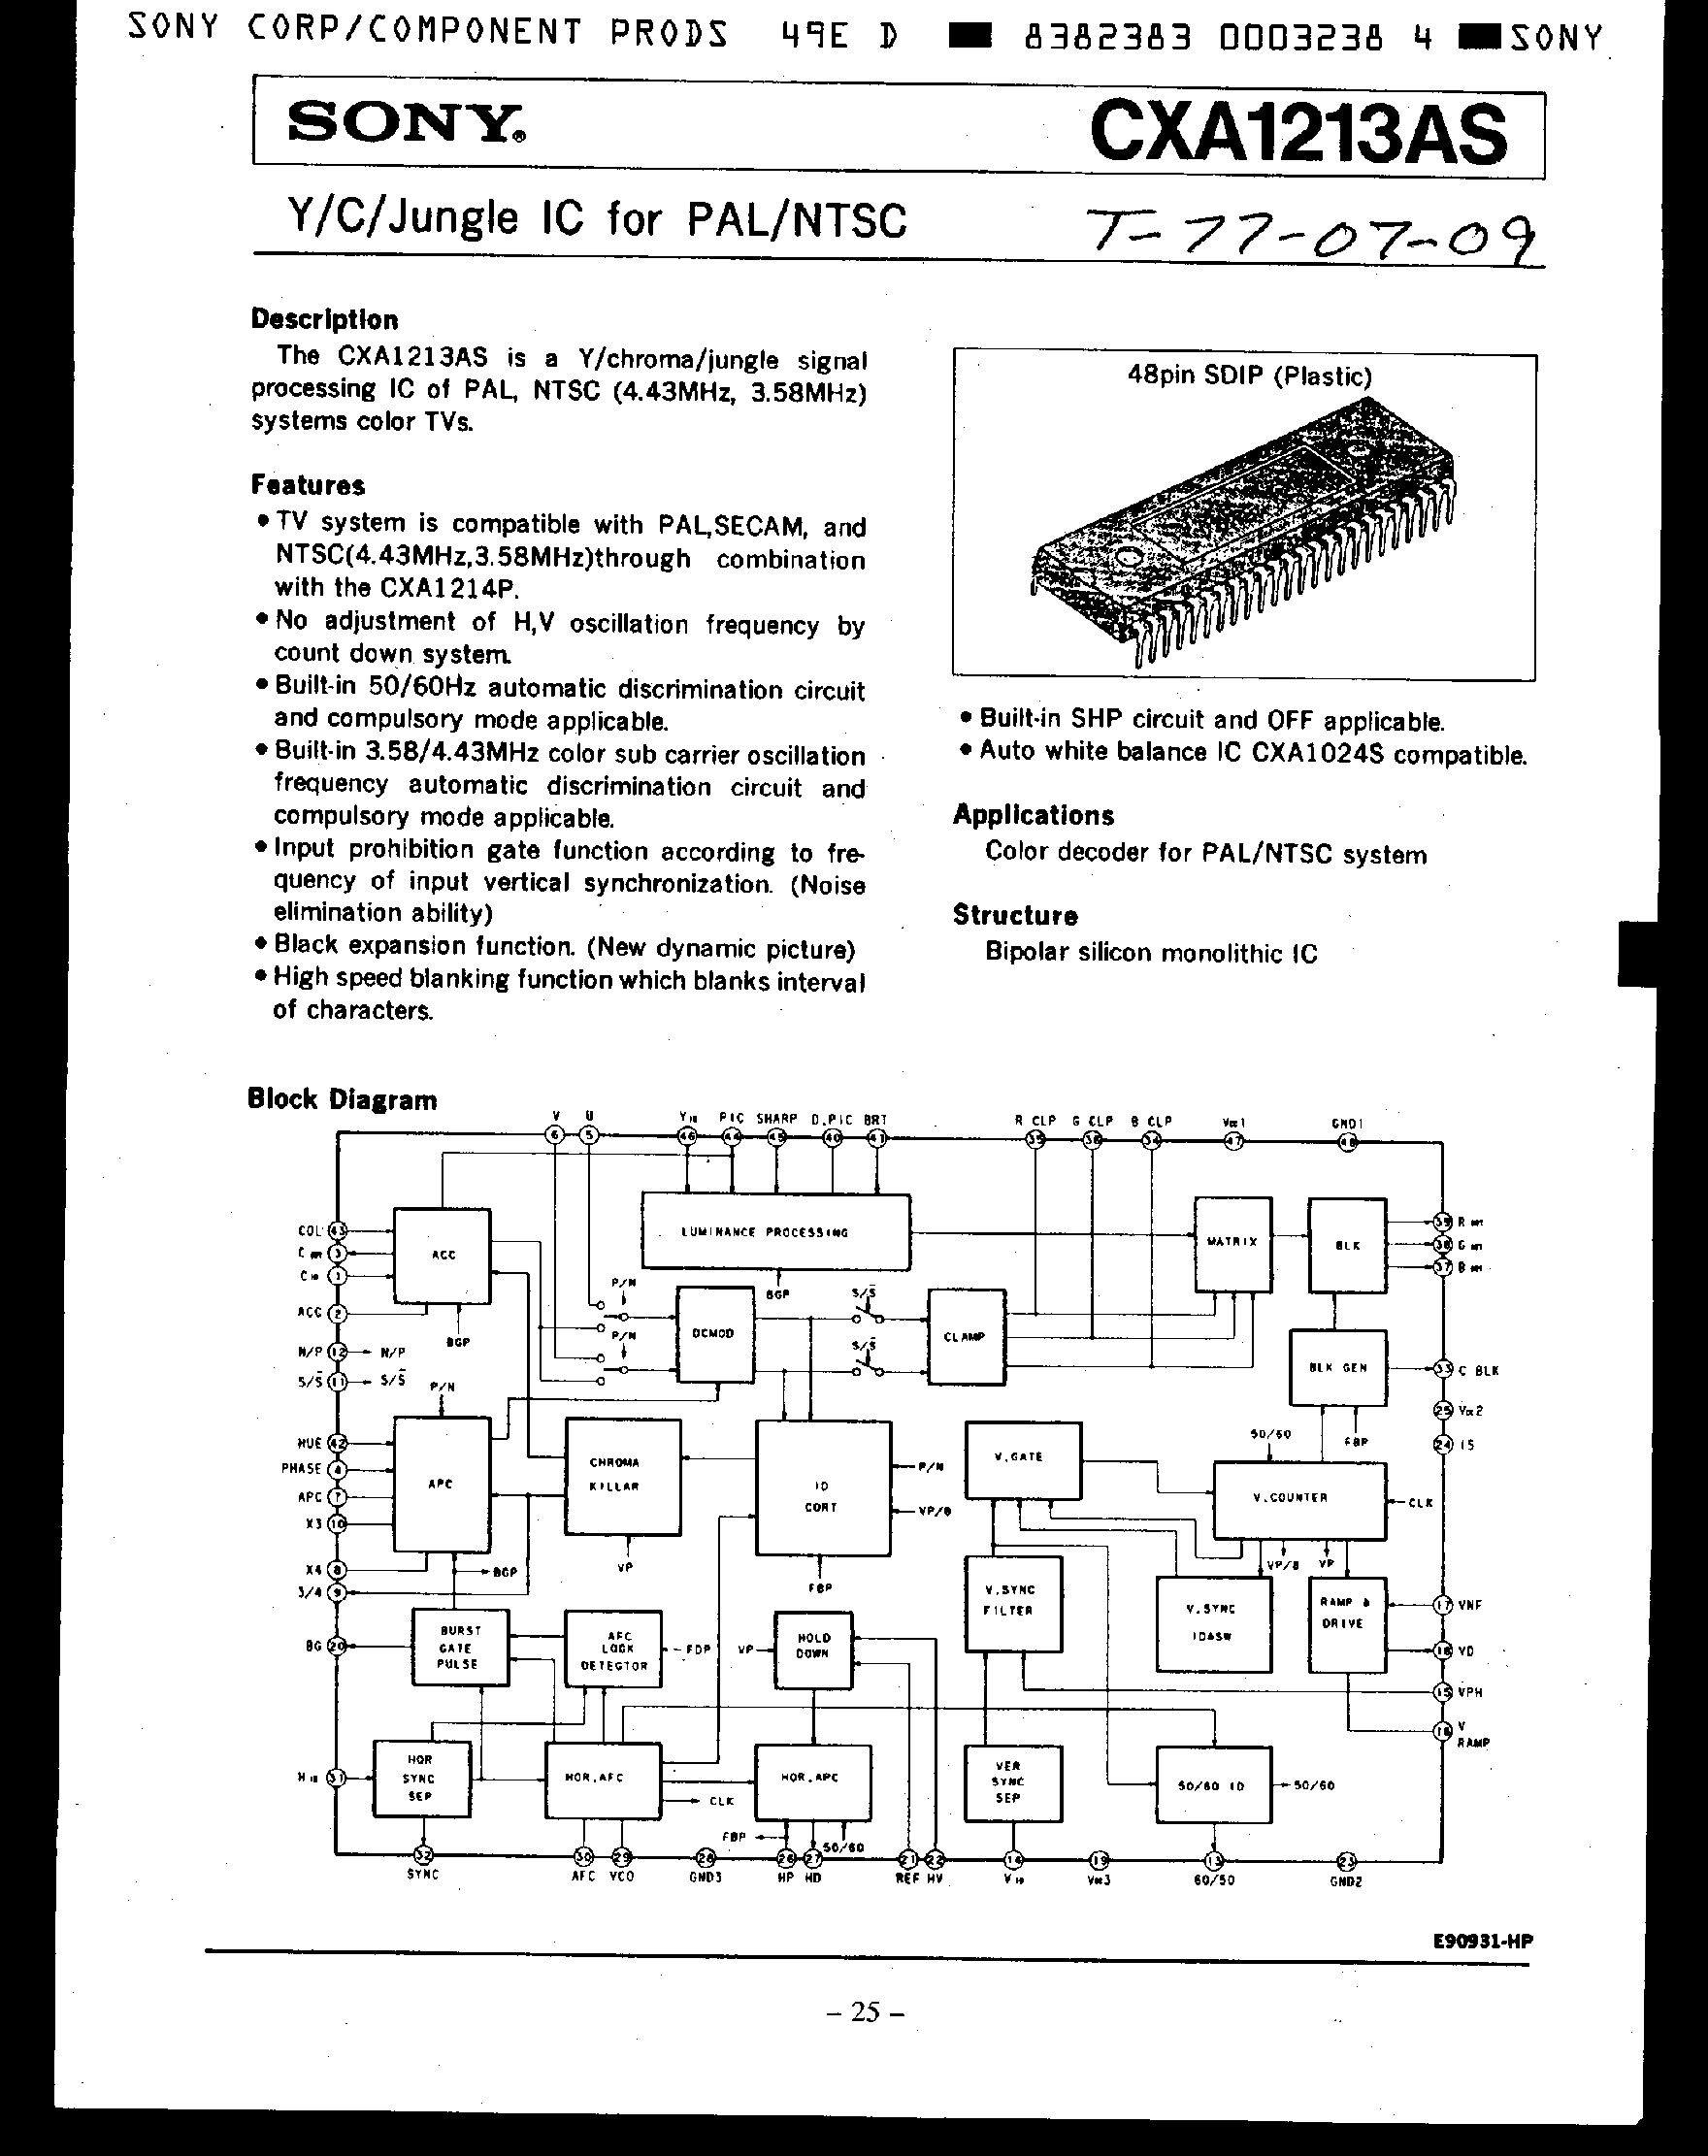 Datasheet CXA1213AS - Y/C/Jungle IC for PAL/NTSC page 1